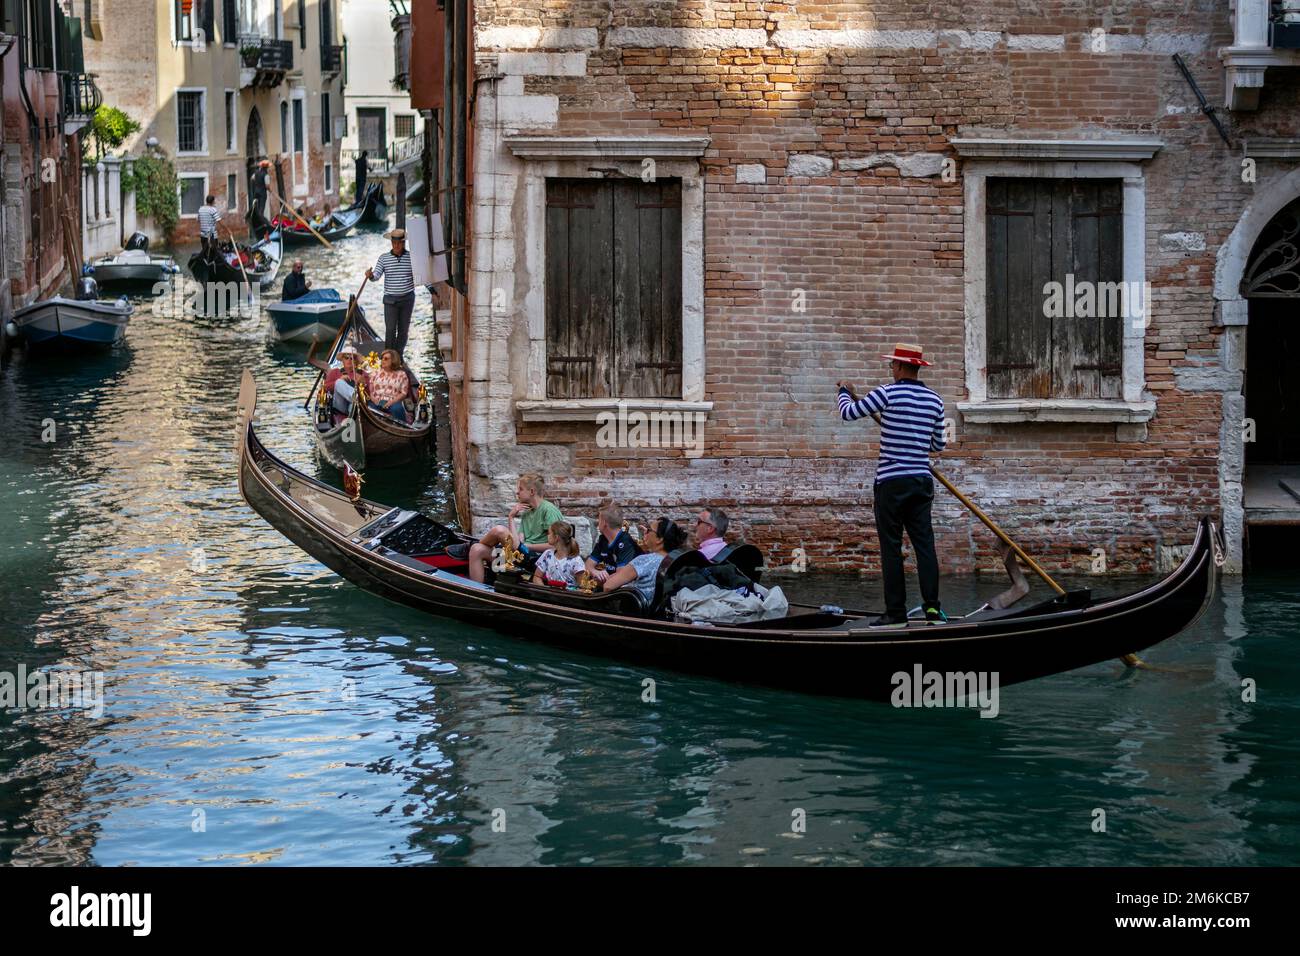 Gondola, a traditional Venetian row boat on a canal in Venice, Italy Stock Photo